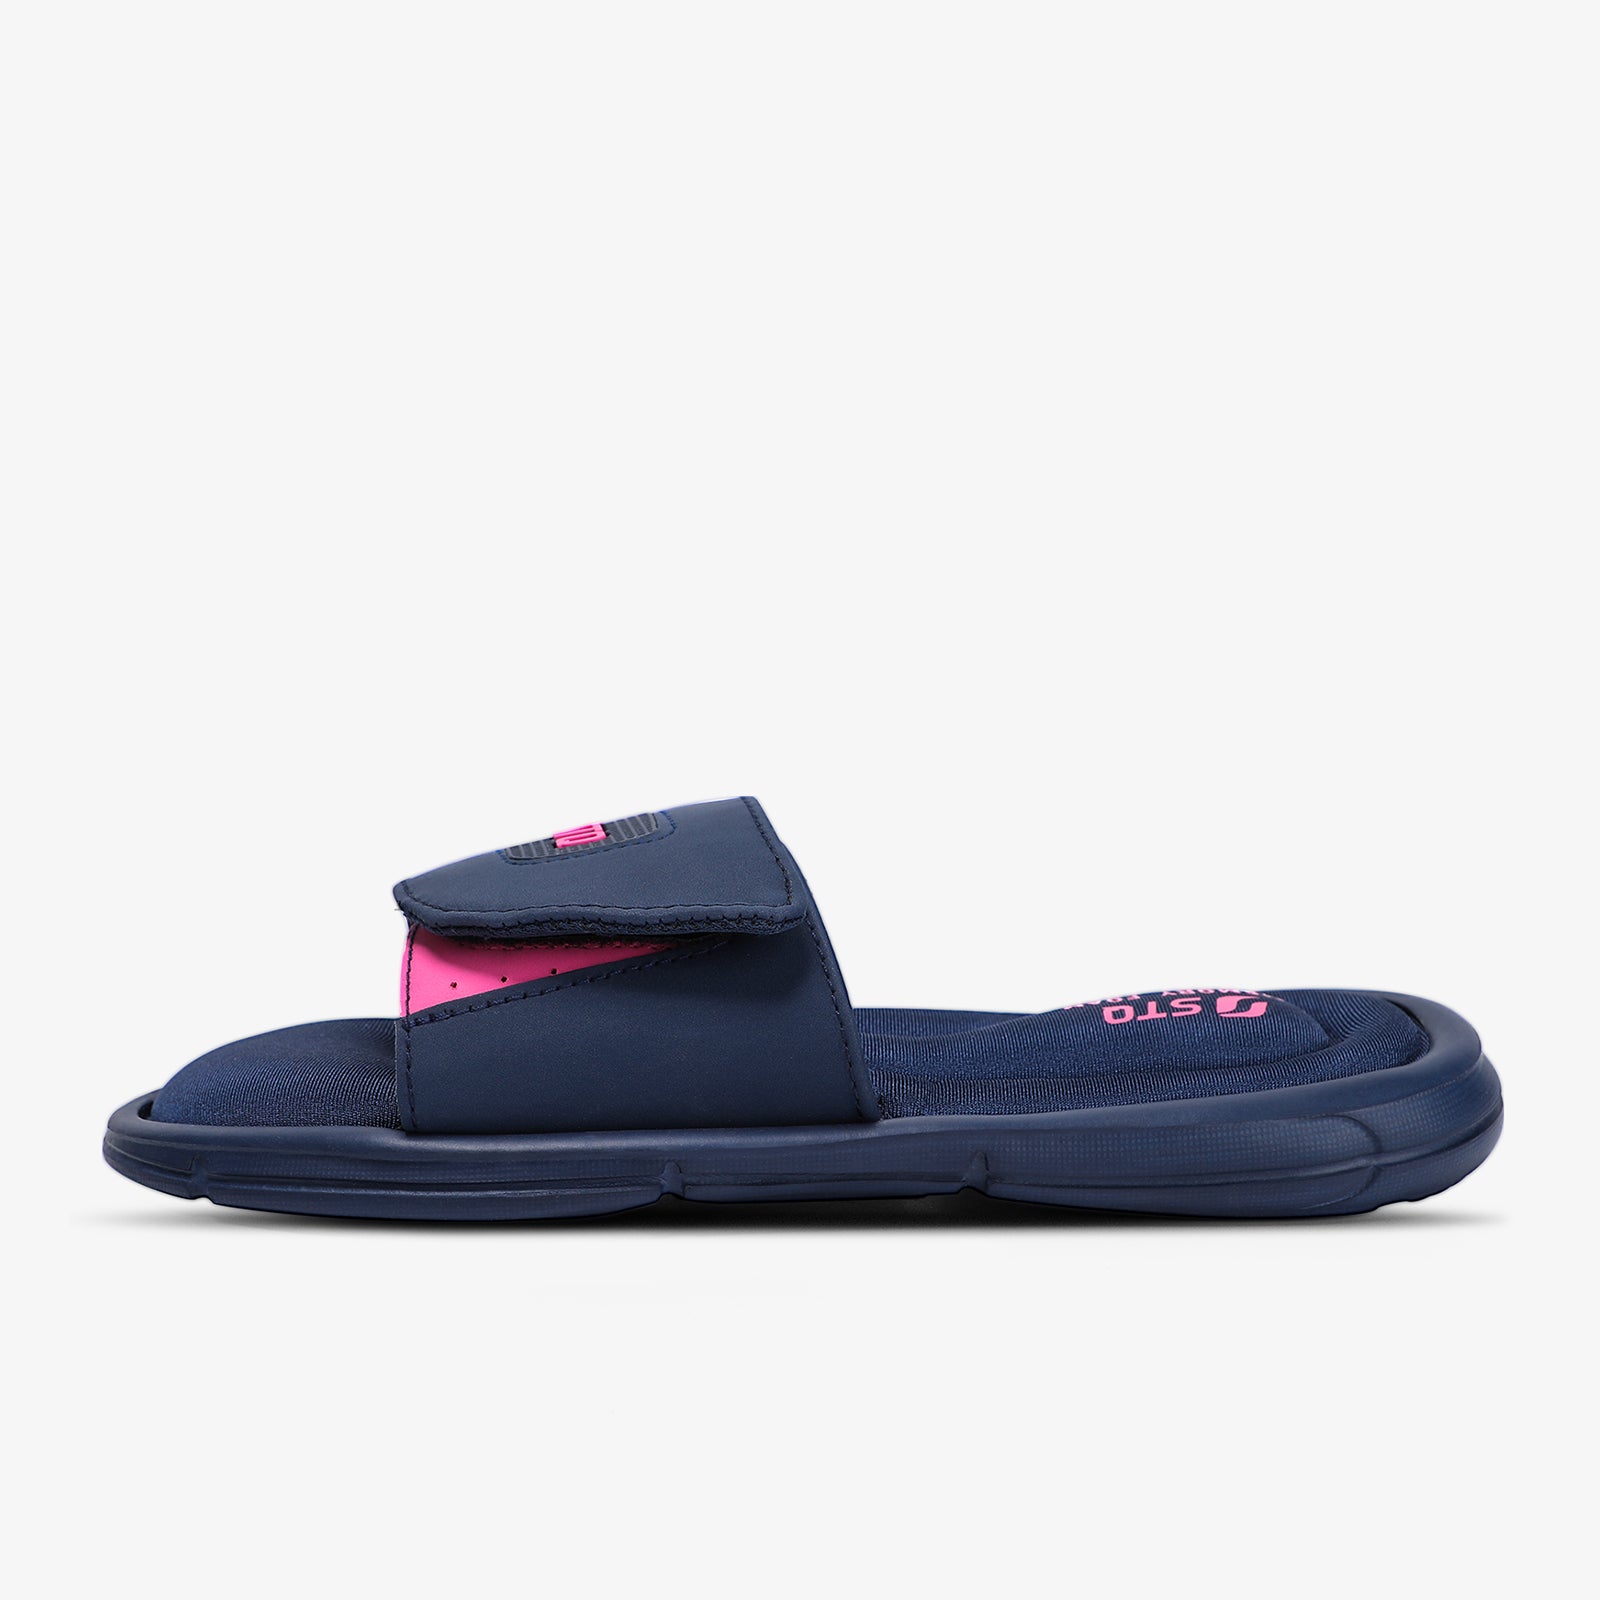 STQ Memory Foam Slides for Women Comfort Adjustable Recovery Sandals